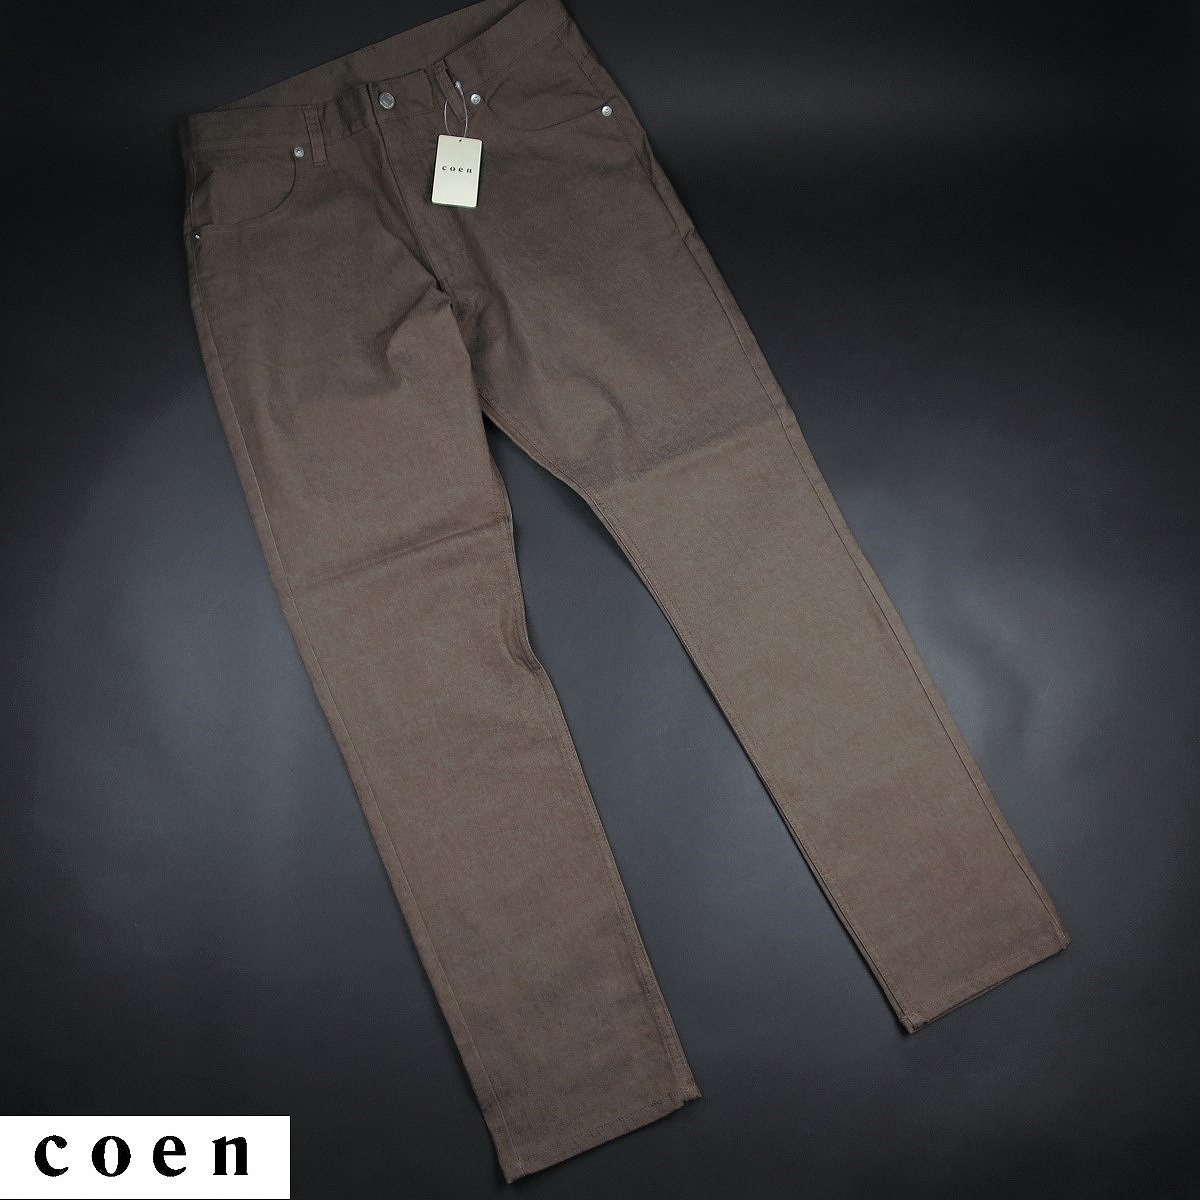  new goods * United Arrows /ko-en/coen/ stretch slim beautiful legs pants 0238/29 tea /[L]